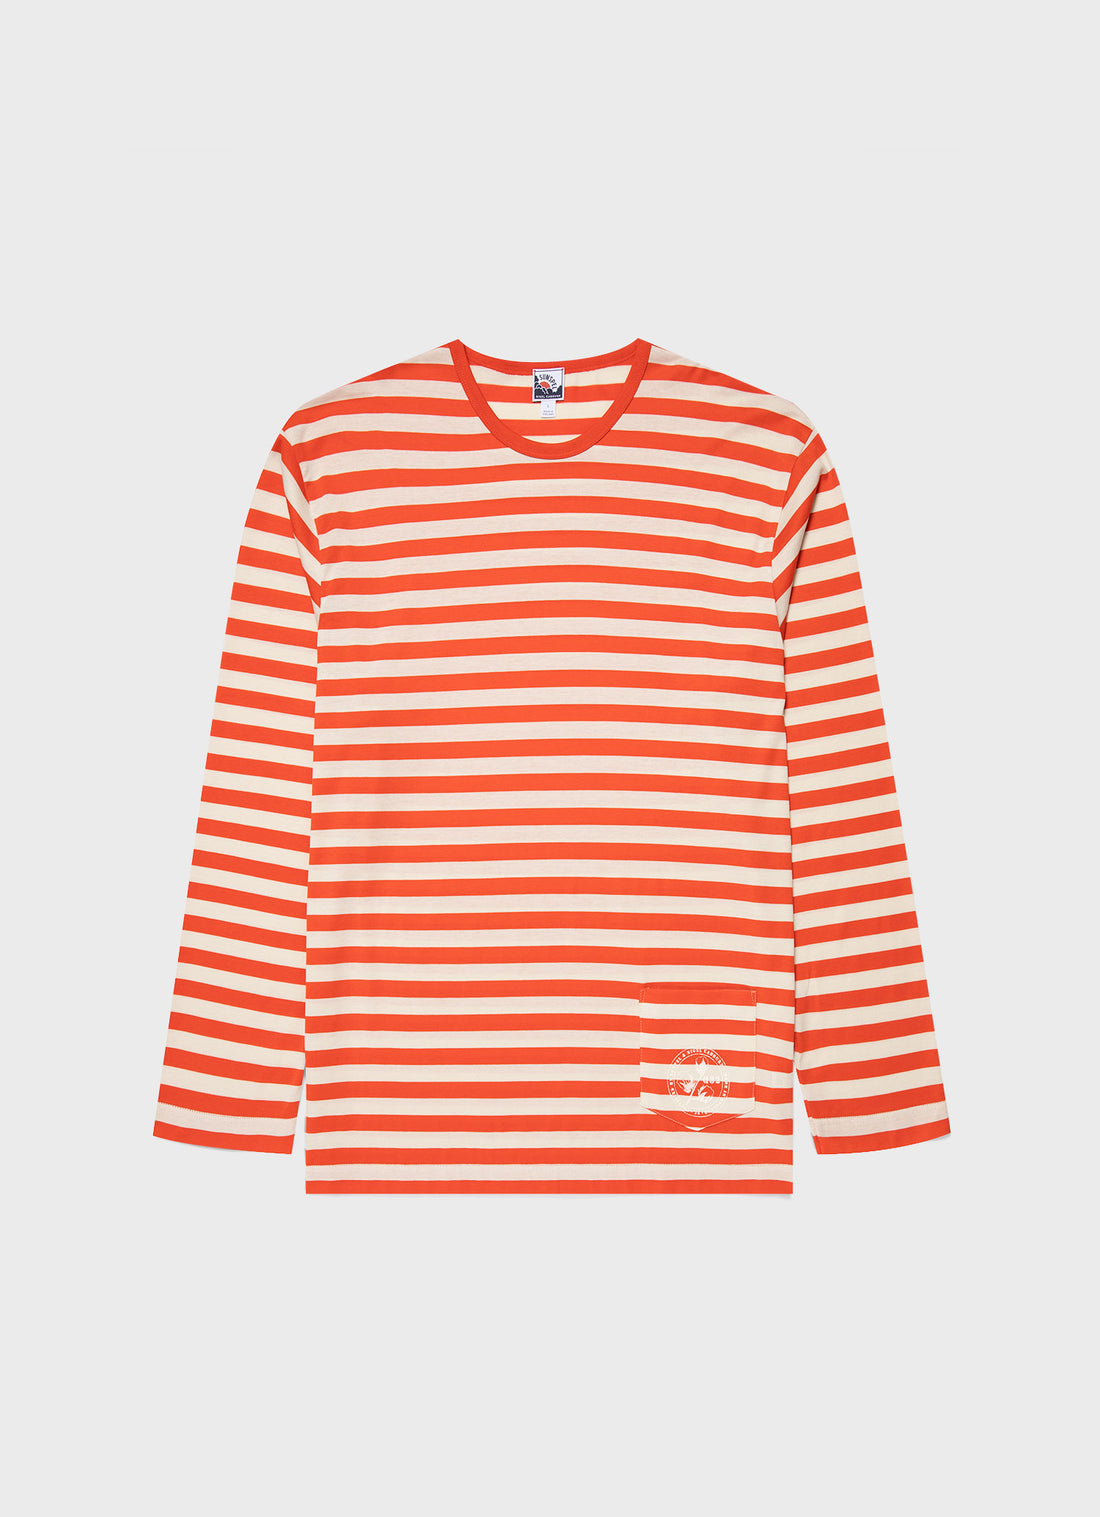 Men's Sunspel x Nigel Cabourn Long Sleeve T-shirt in Orange/Stone White